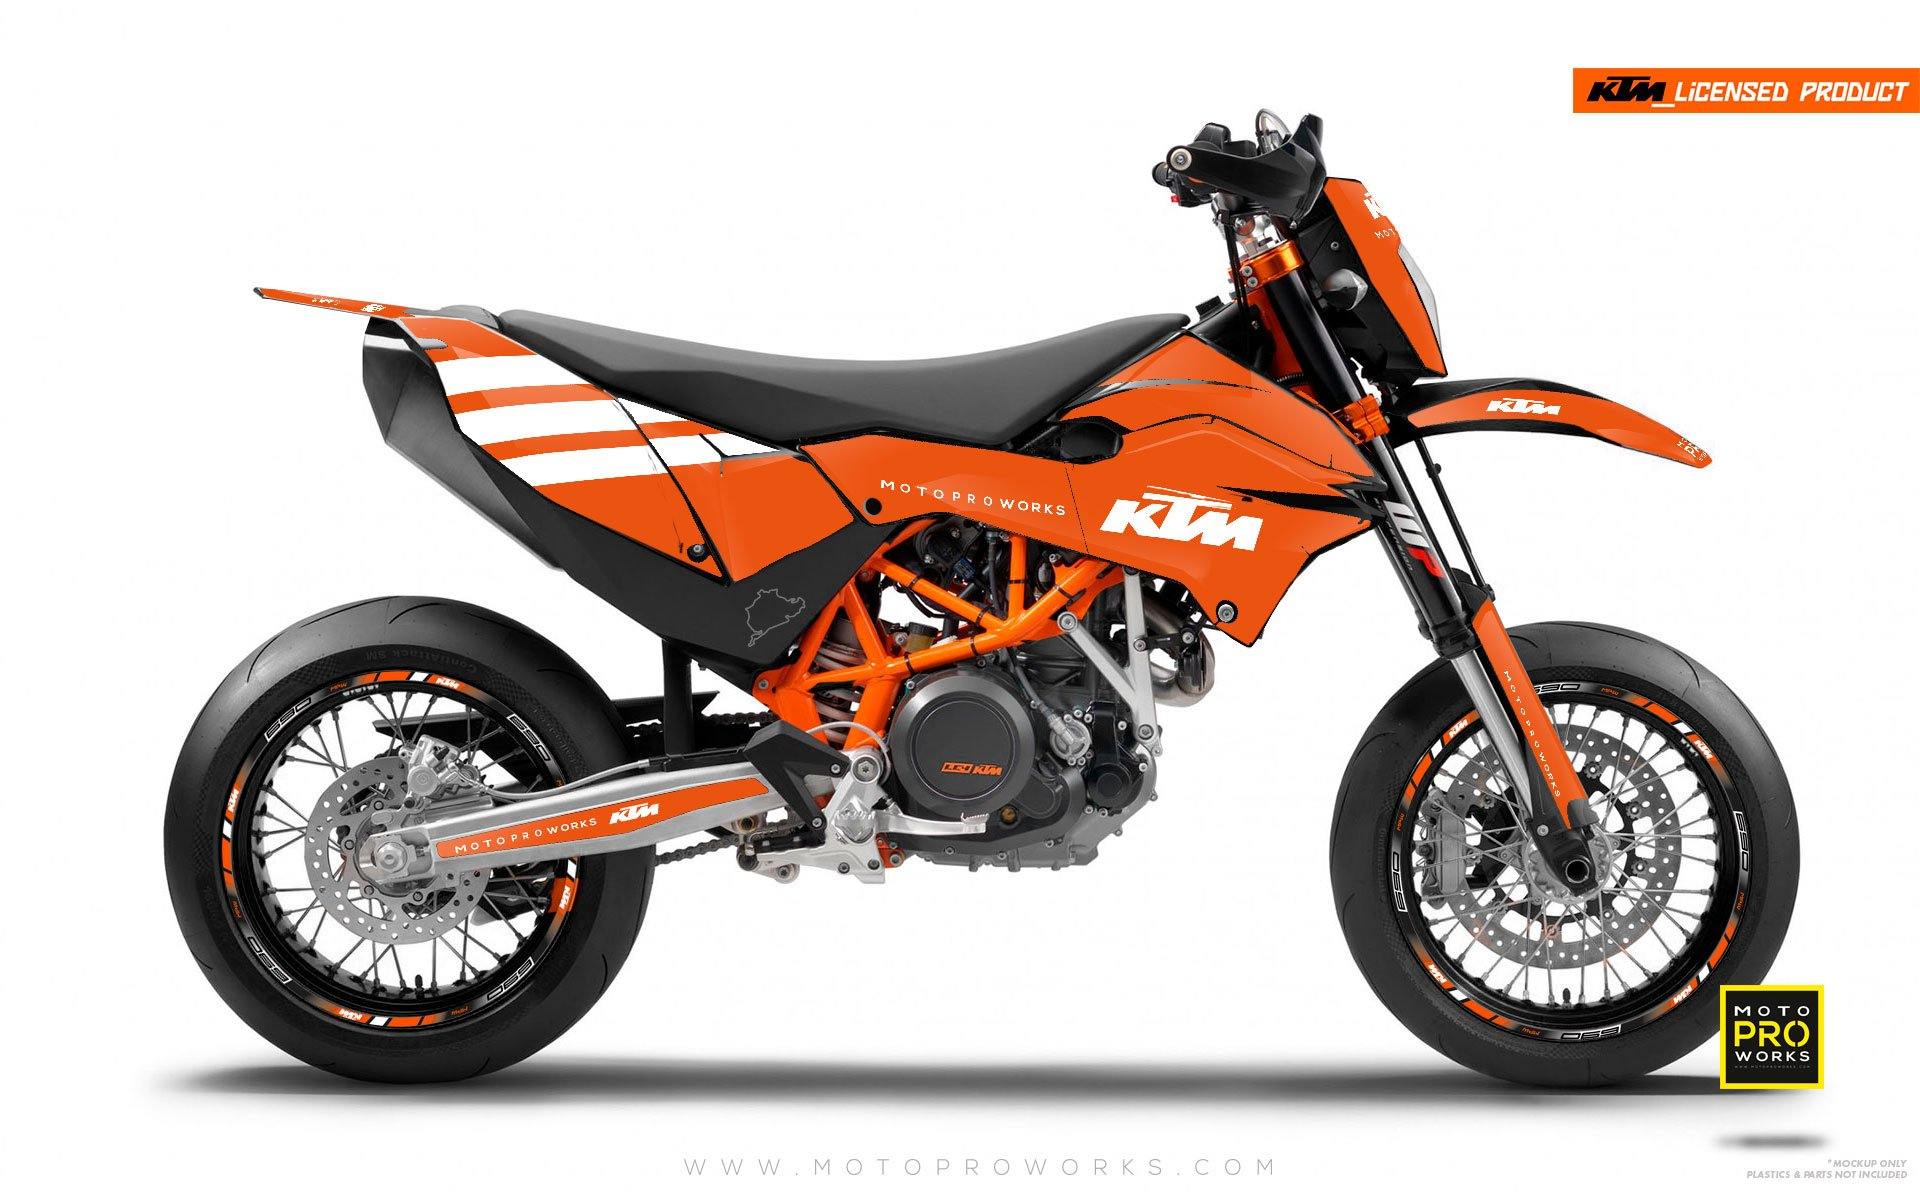 KTM GRAPHIC KIT - "FLAT ICON" (orange/white) - MotoProWorks | Decals and Bike Graphic kit